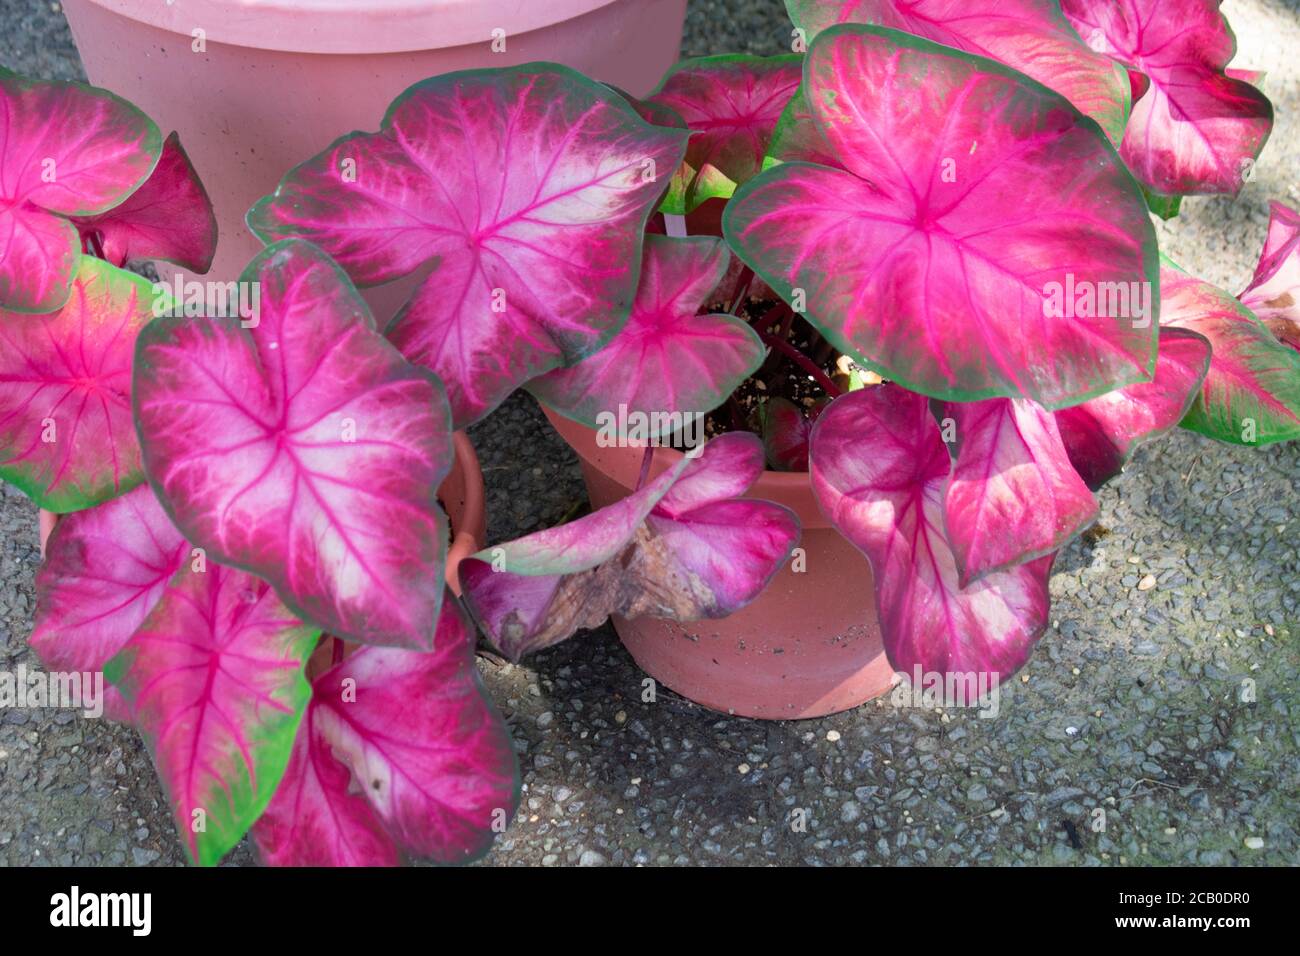 Rosebud, a pink and green fancy leaf caladium. Caladium is a genus of flowering plants in the arum family, Araceae. Stock Photo